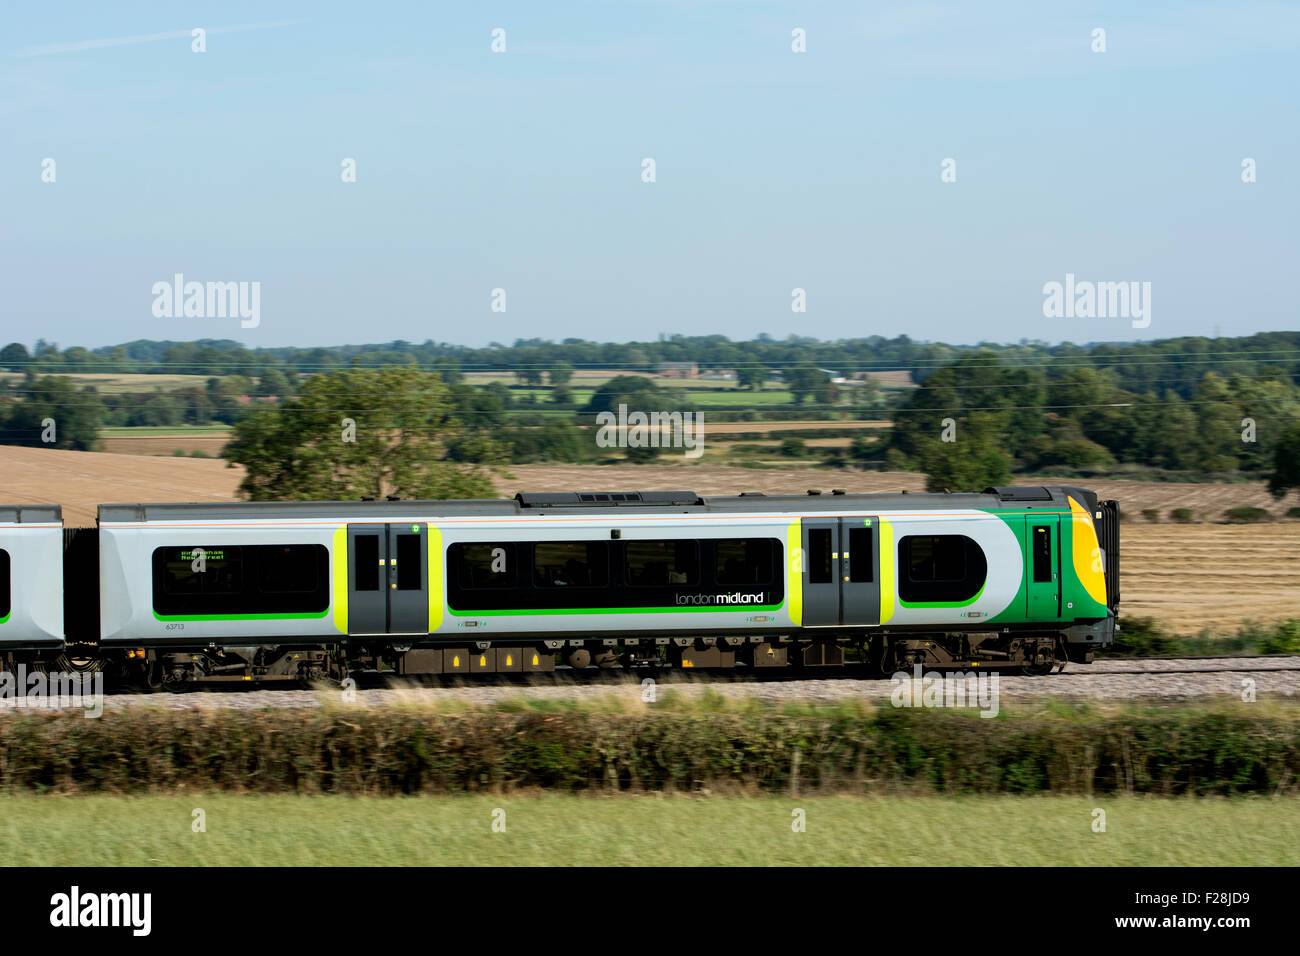 London Midland electric train at speed, Warwickshire, UK Stock Photo